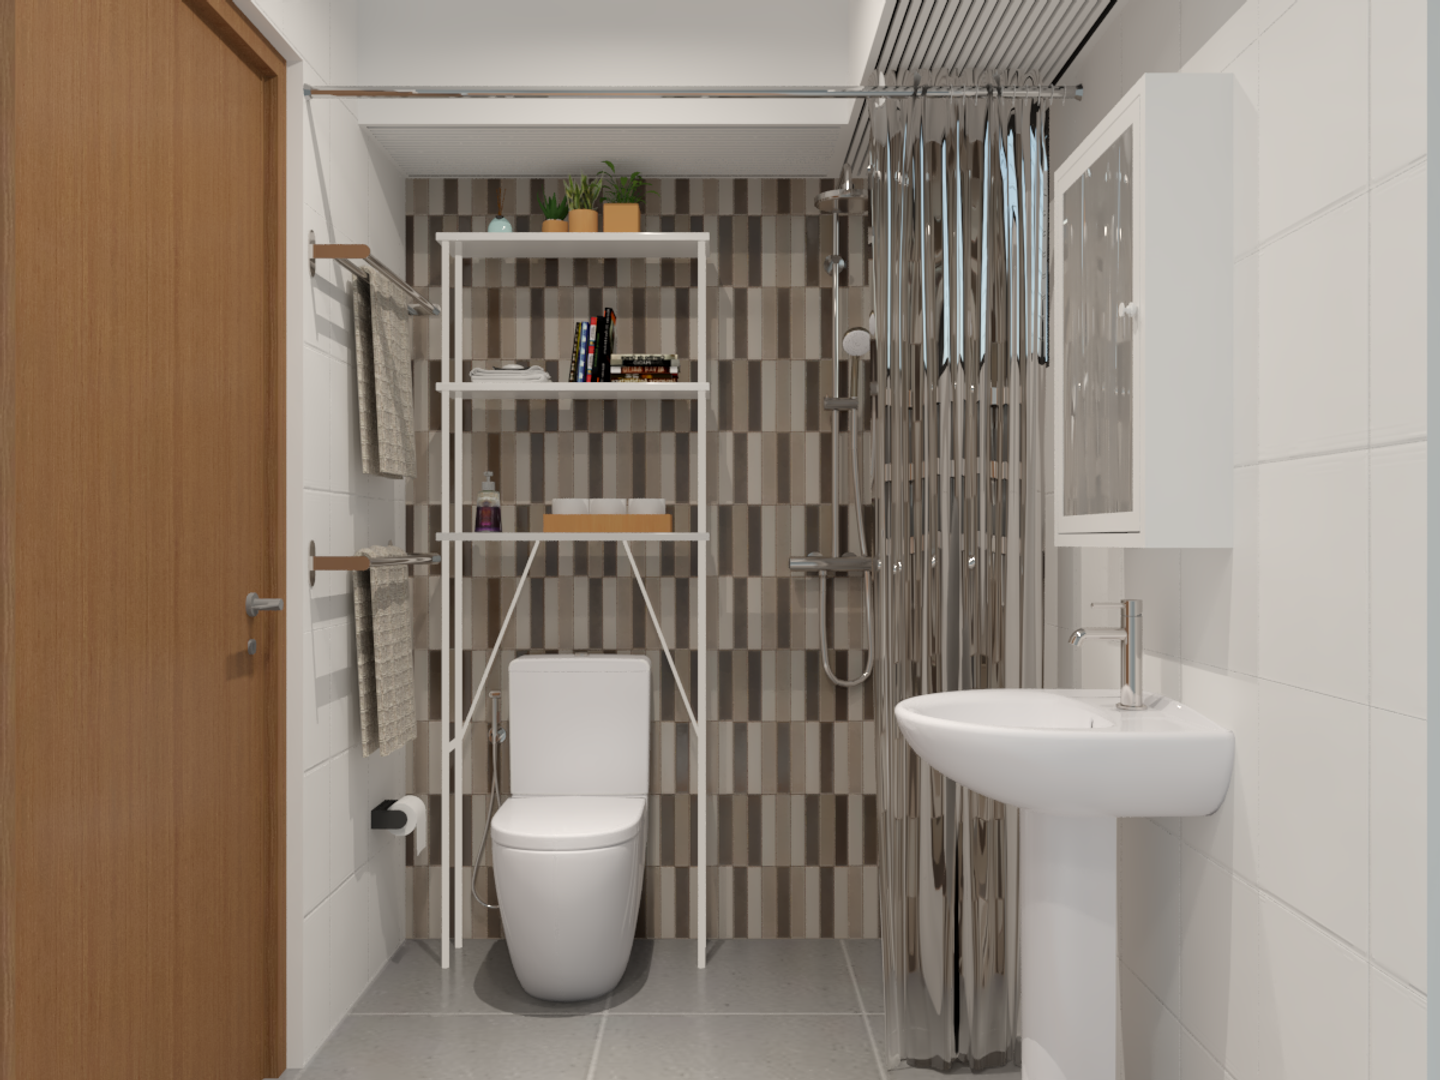 Open Storage Shelf Compact Minimal Bathroom Design with Shower Curtain - Livspace